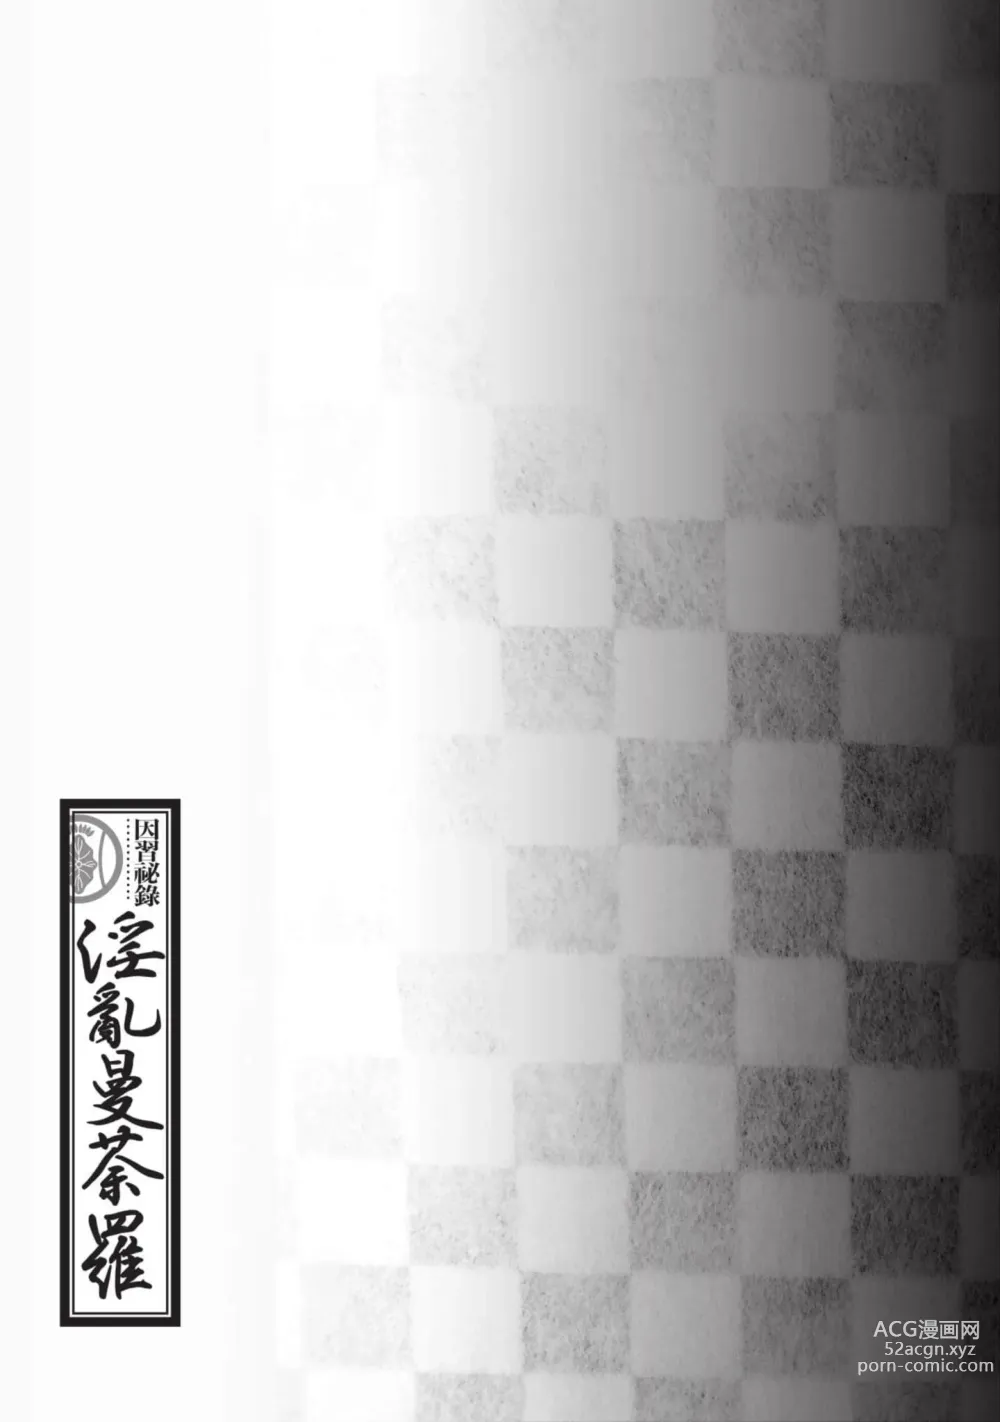 Page 156 of manga Inshuu Hiroku Midare Mandara 2